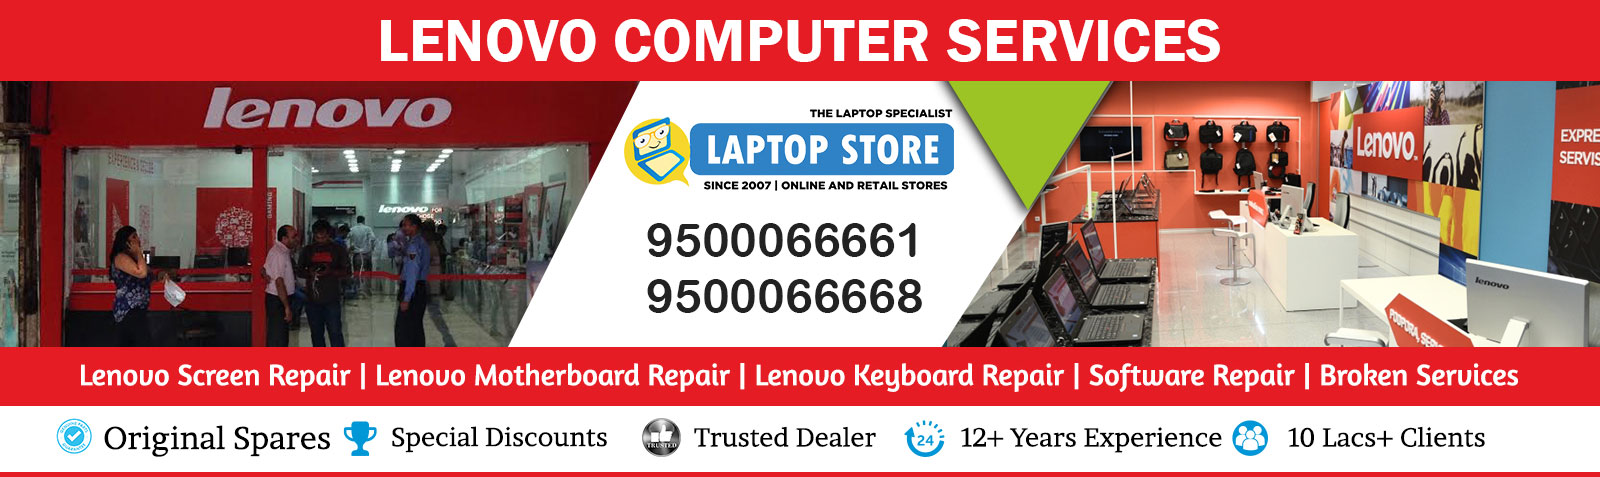 Computer Services Banner